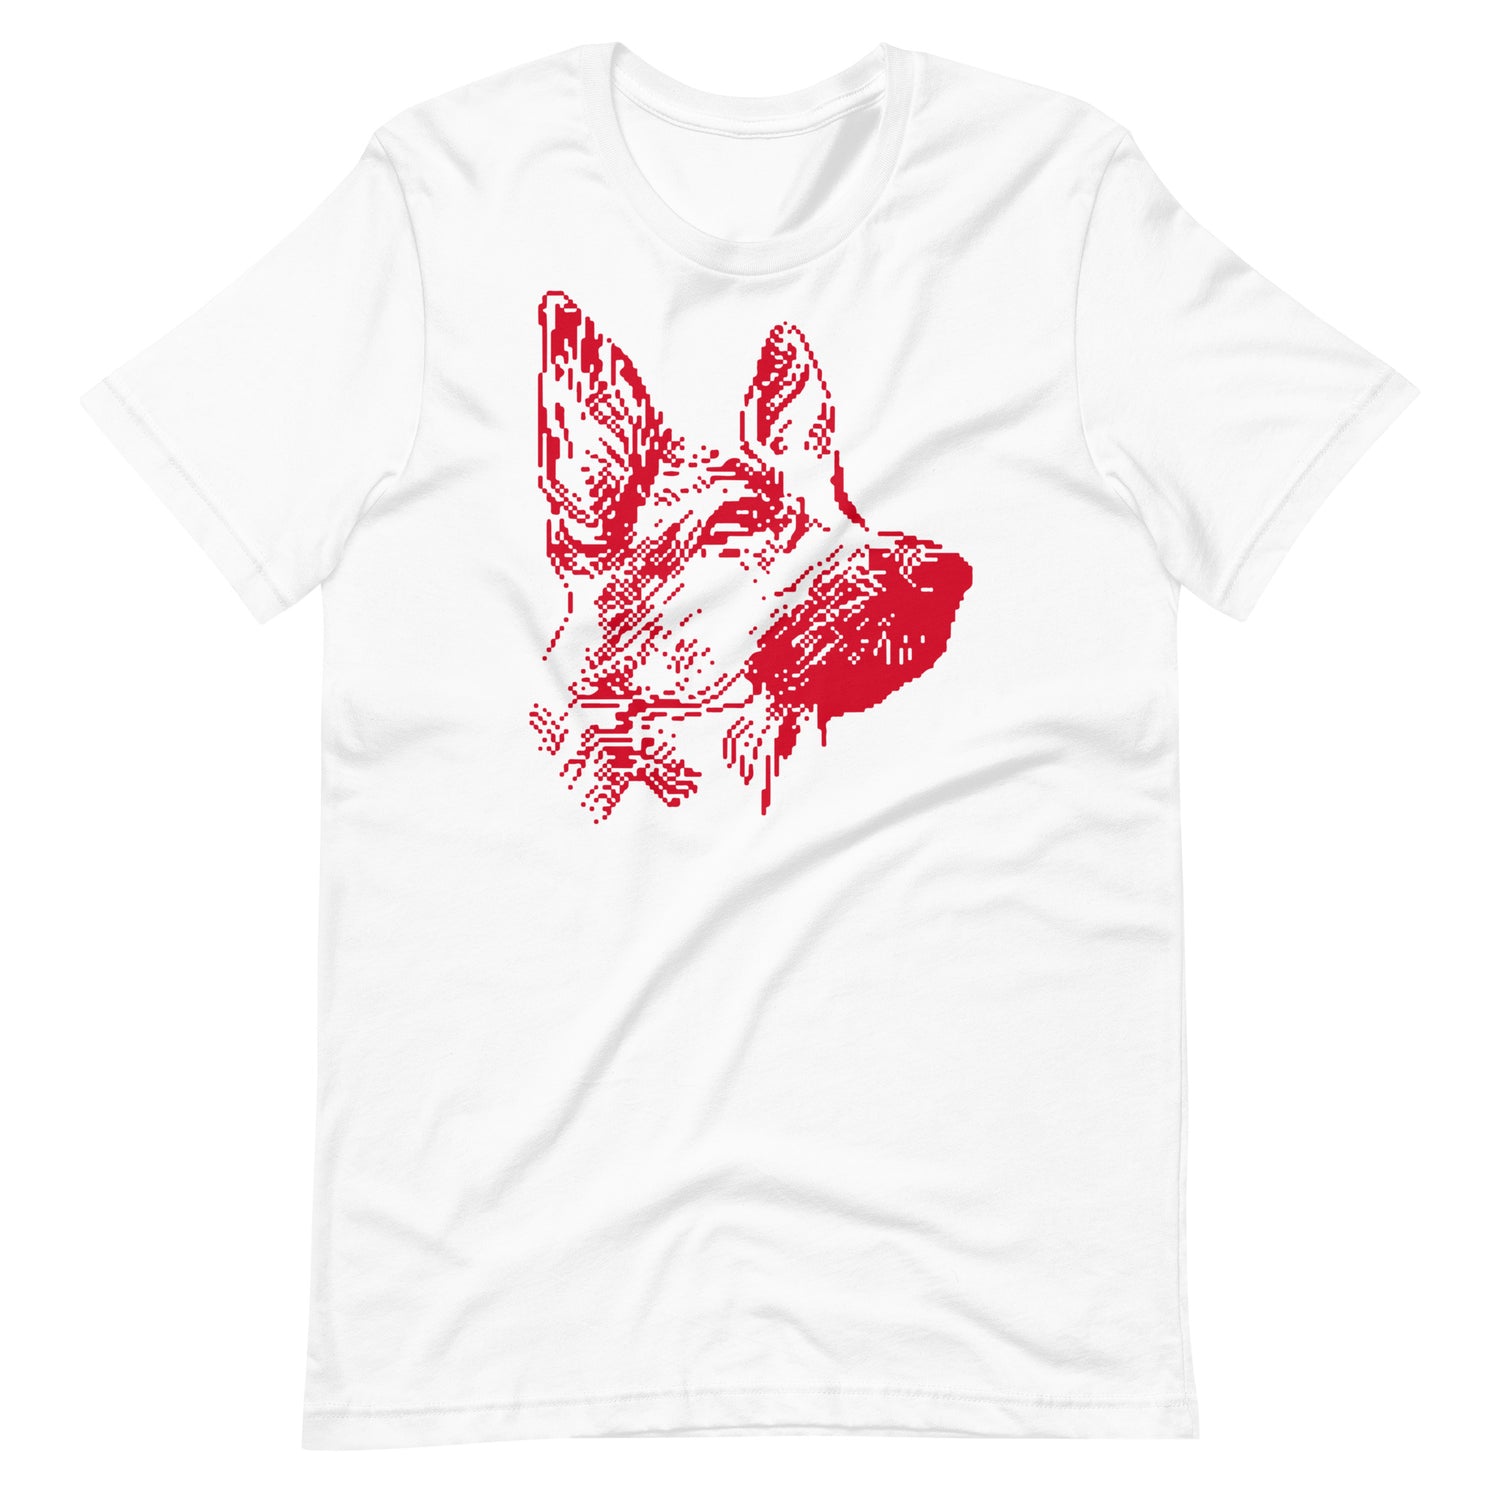 Red German Shepherd face digital silhouette on unisex white t-shirt